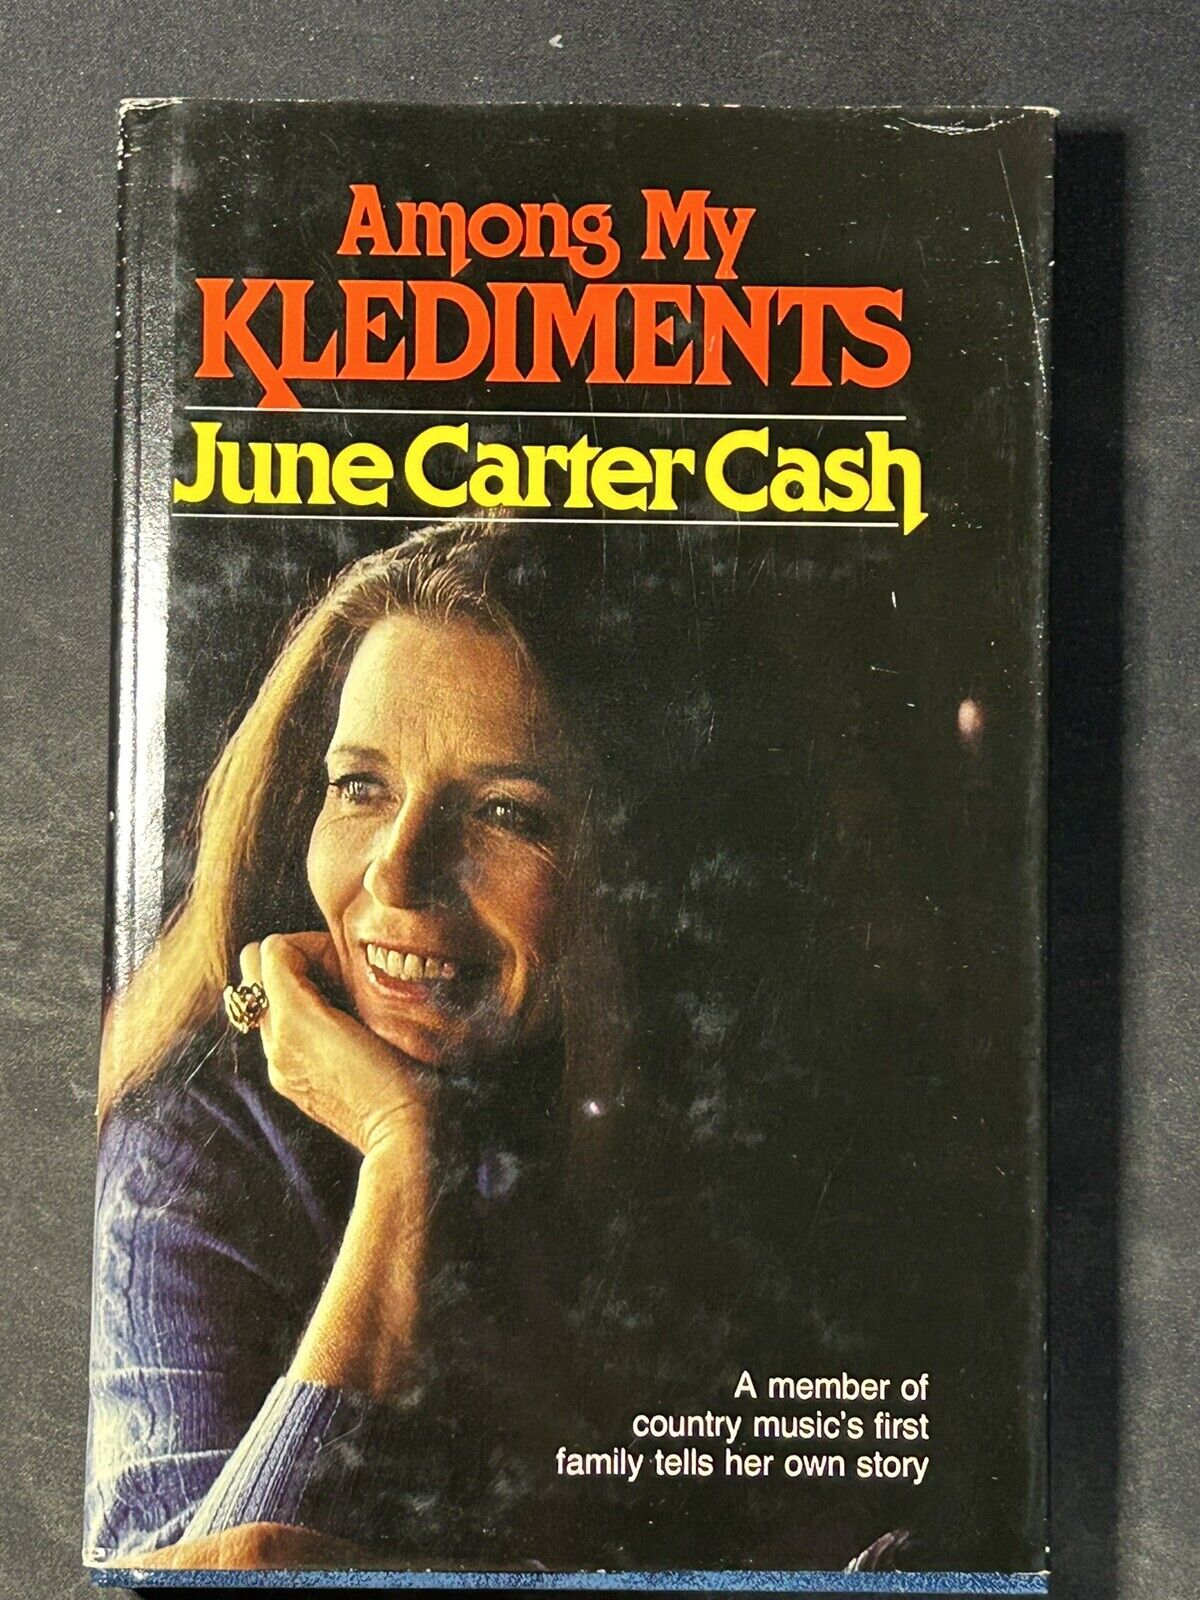 Among My Klediments Hardcover Book By June Carter Cash(1979 Zondervan)